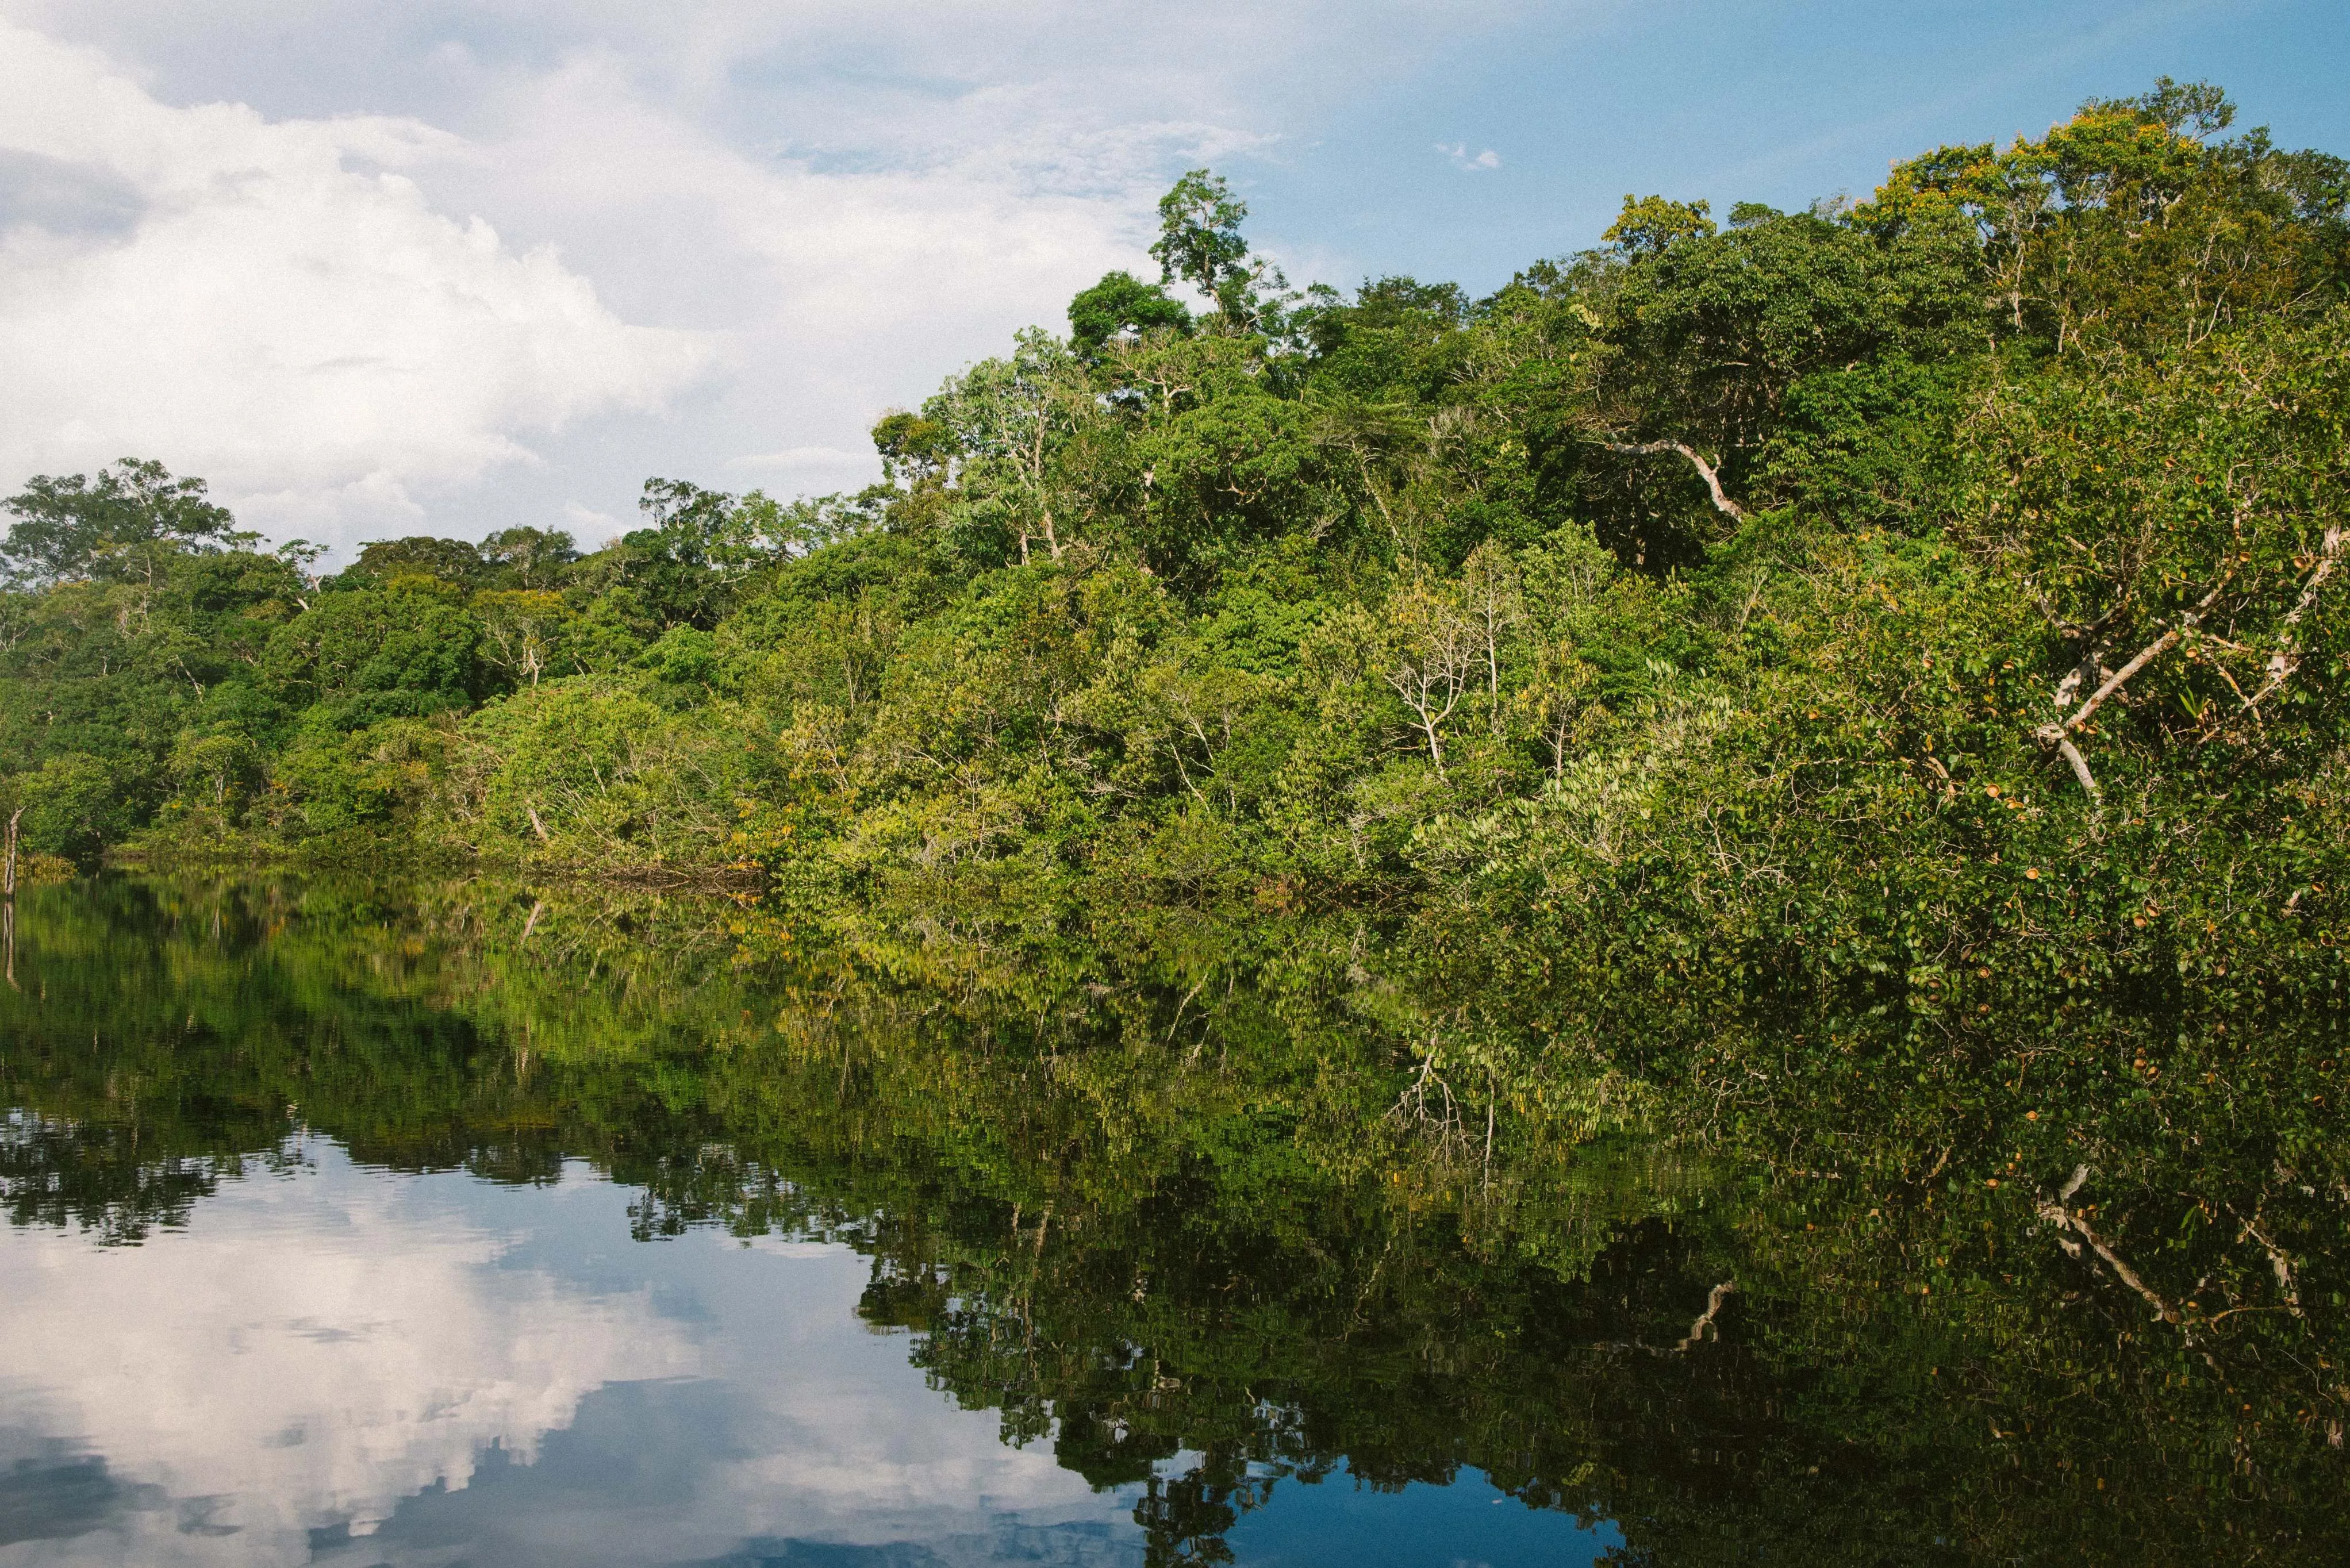 An Amazon rainforest river scene